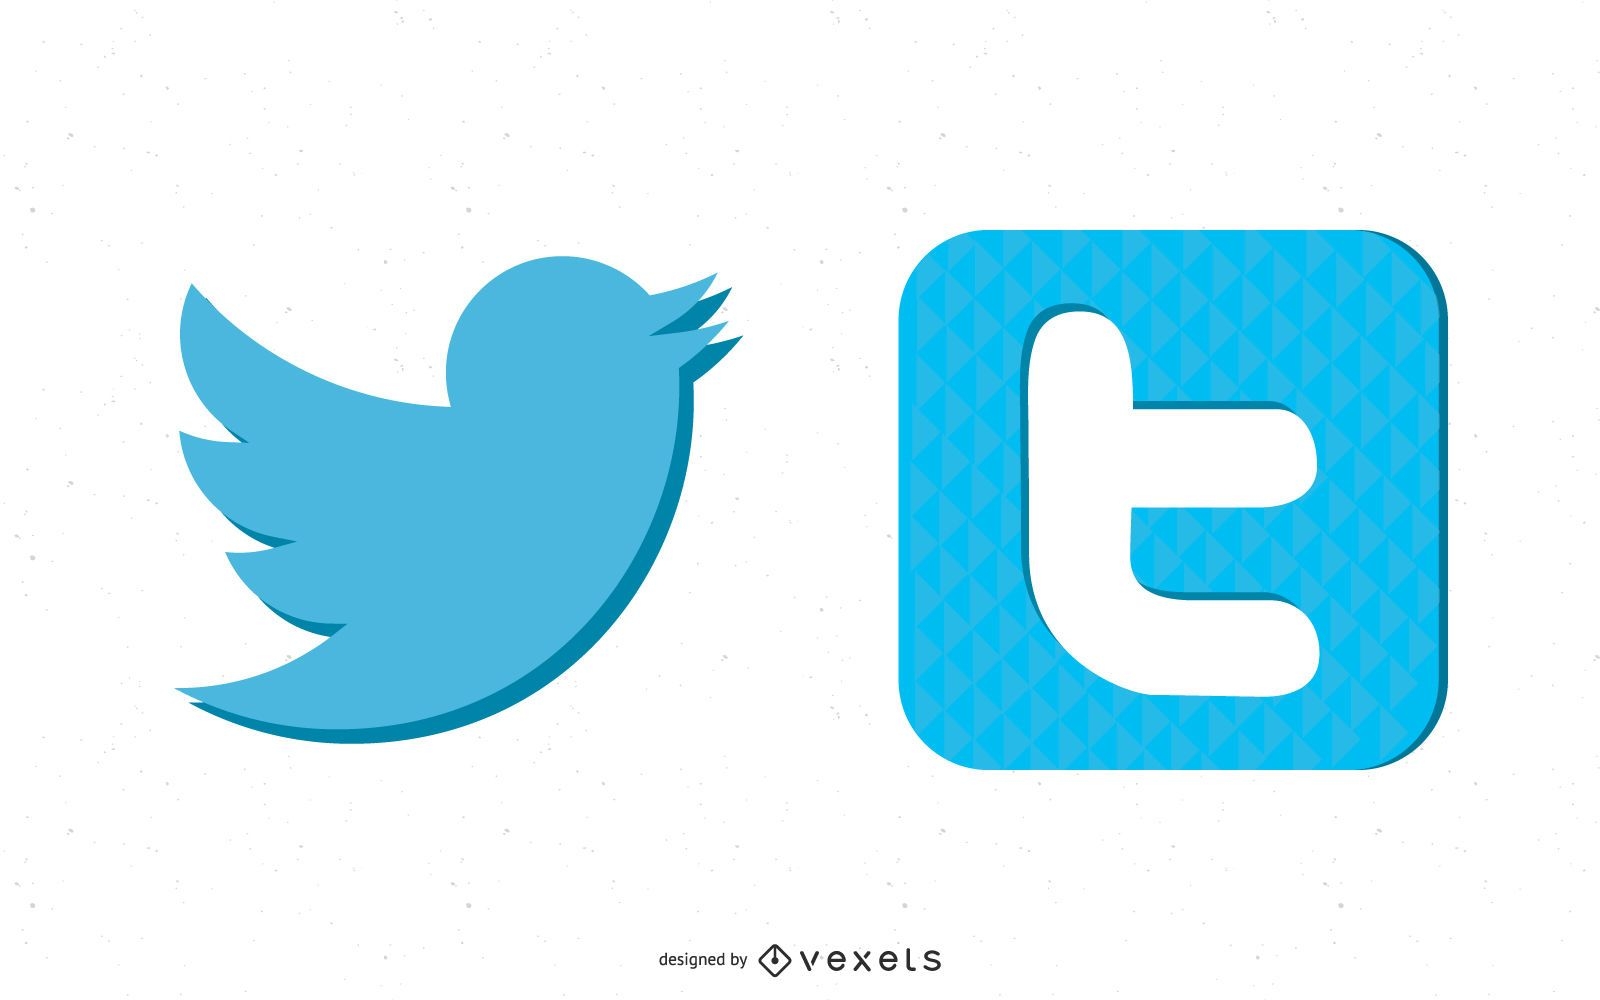 2 impresionantes iconos de Twitter